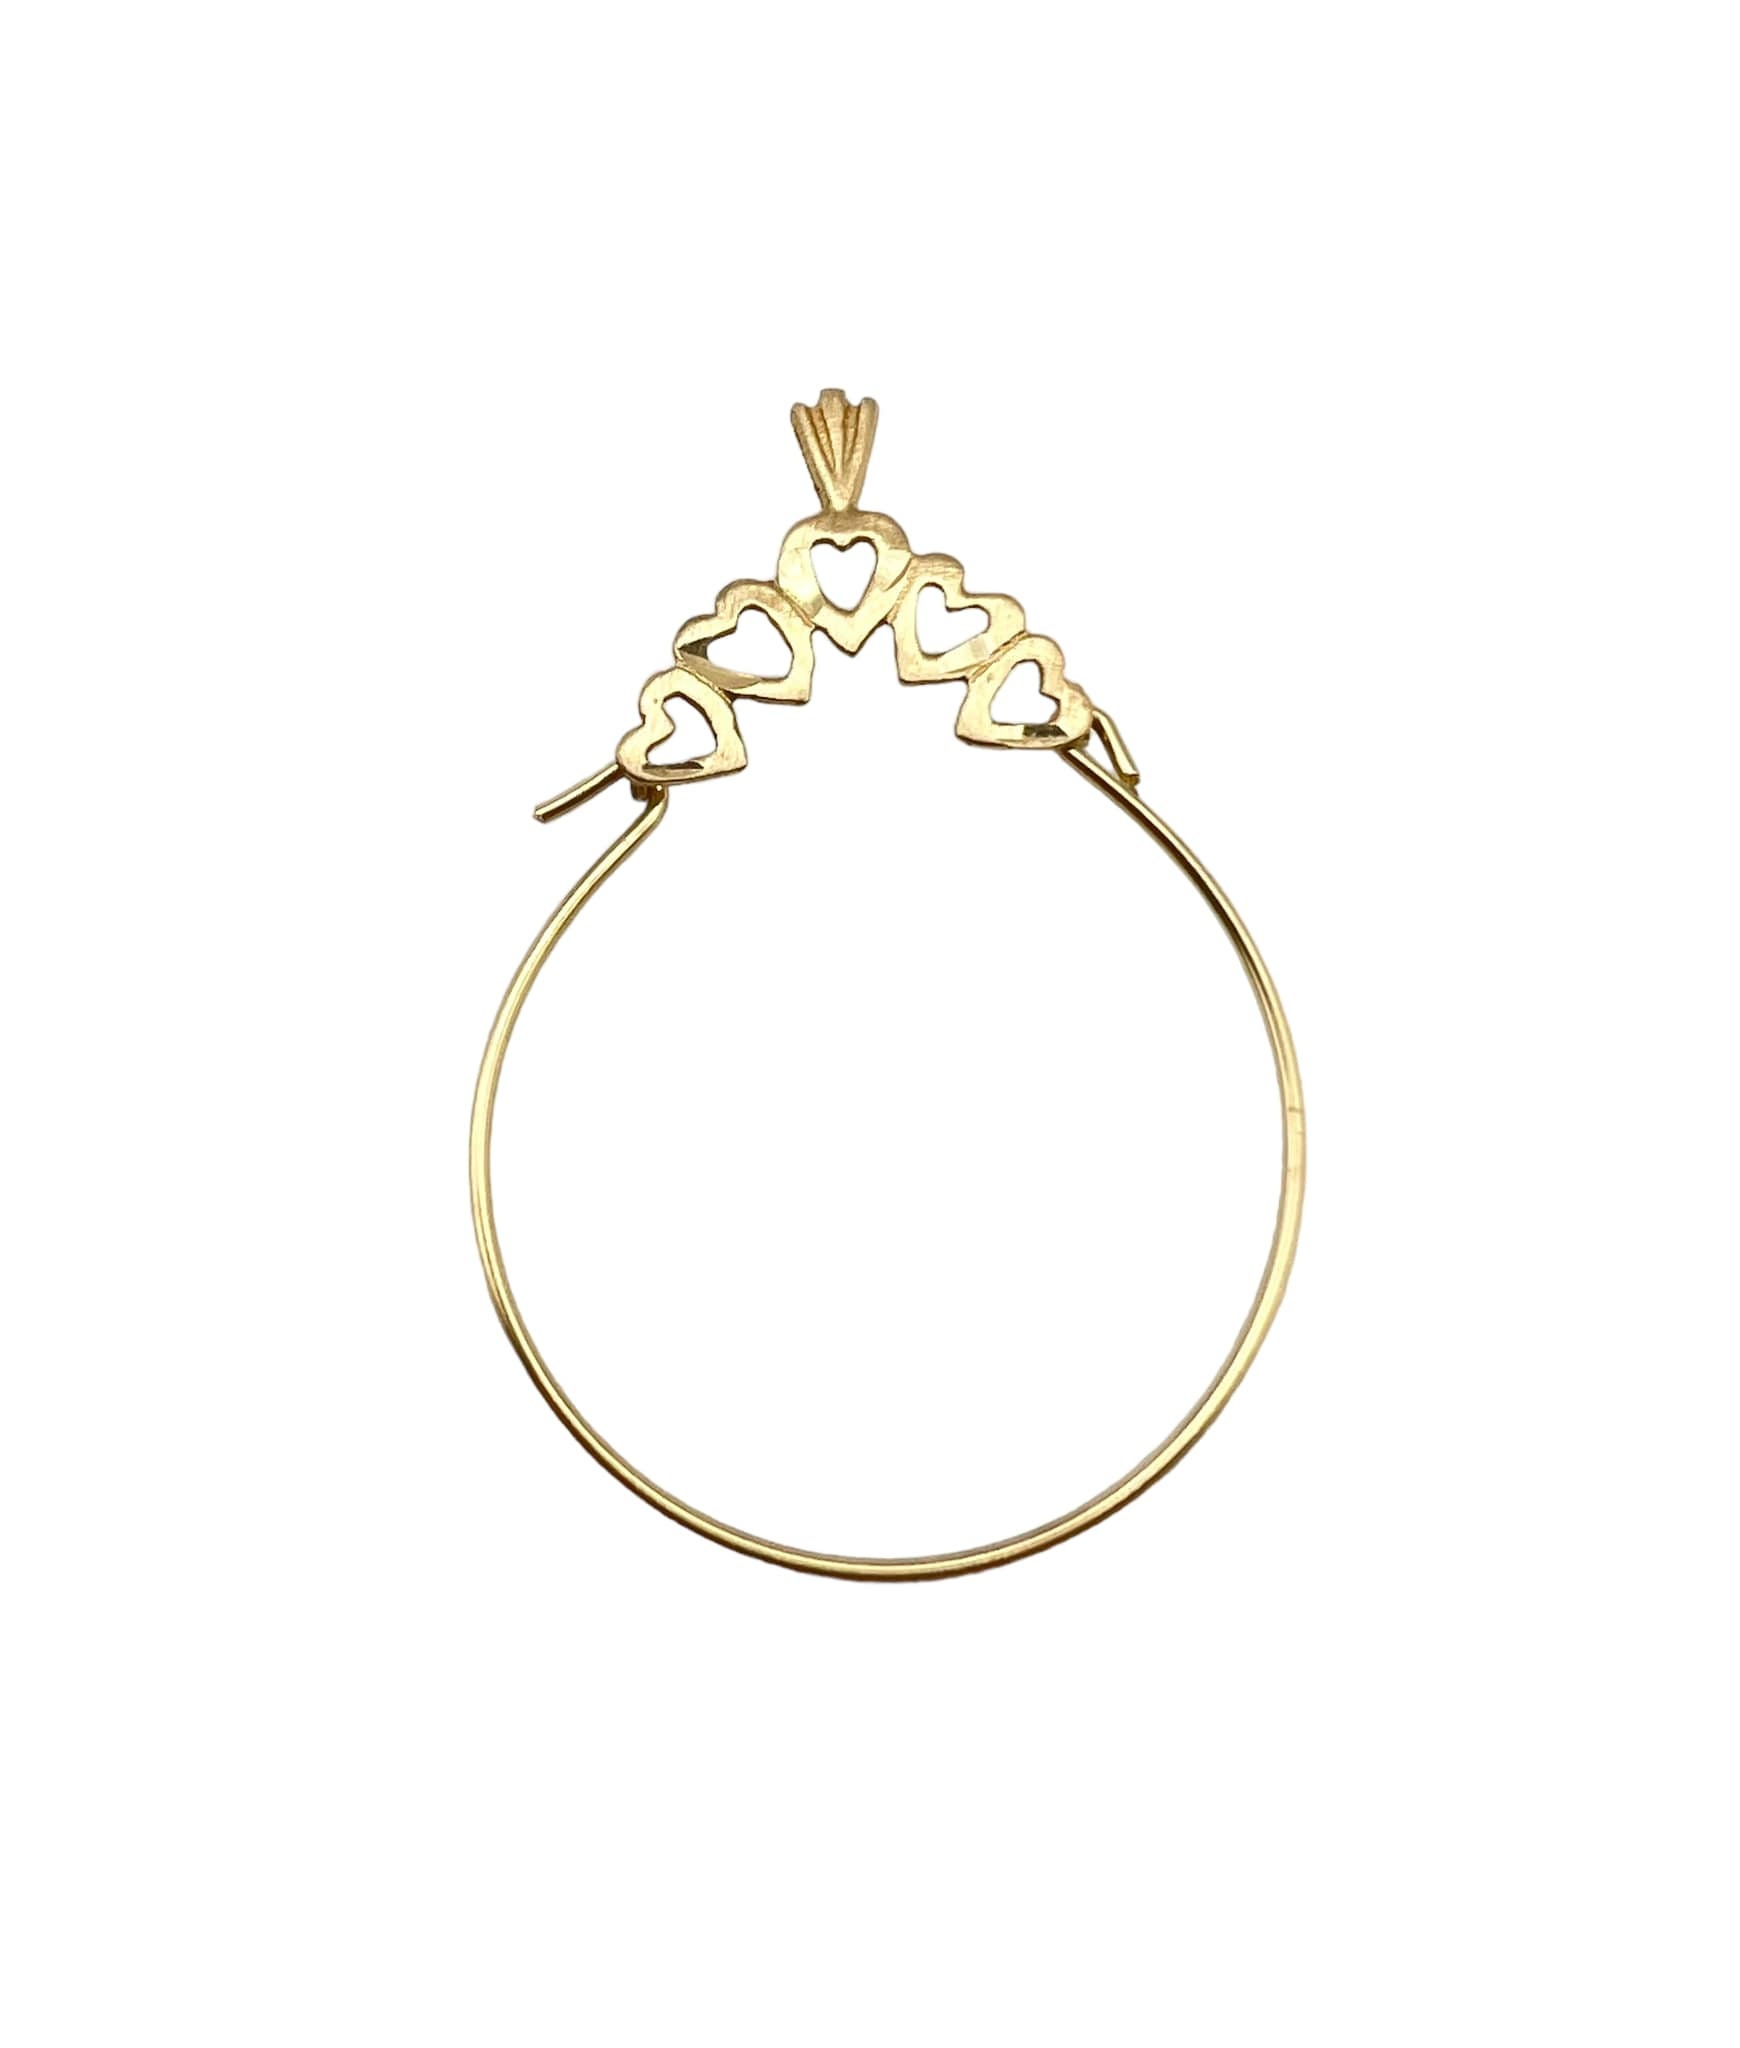 CHARM HOLDER, Charm Necklace, Necklace Pendant, Gold Charm Holder